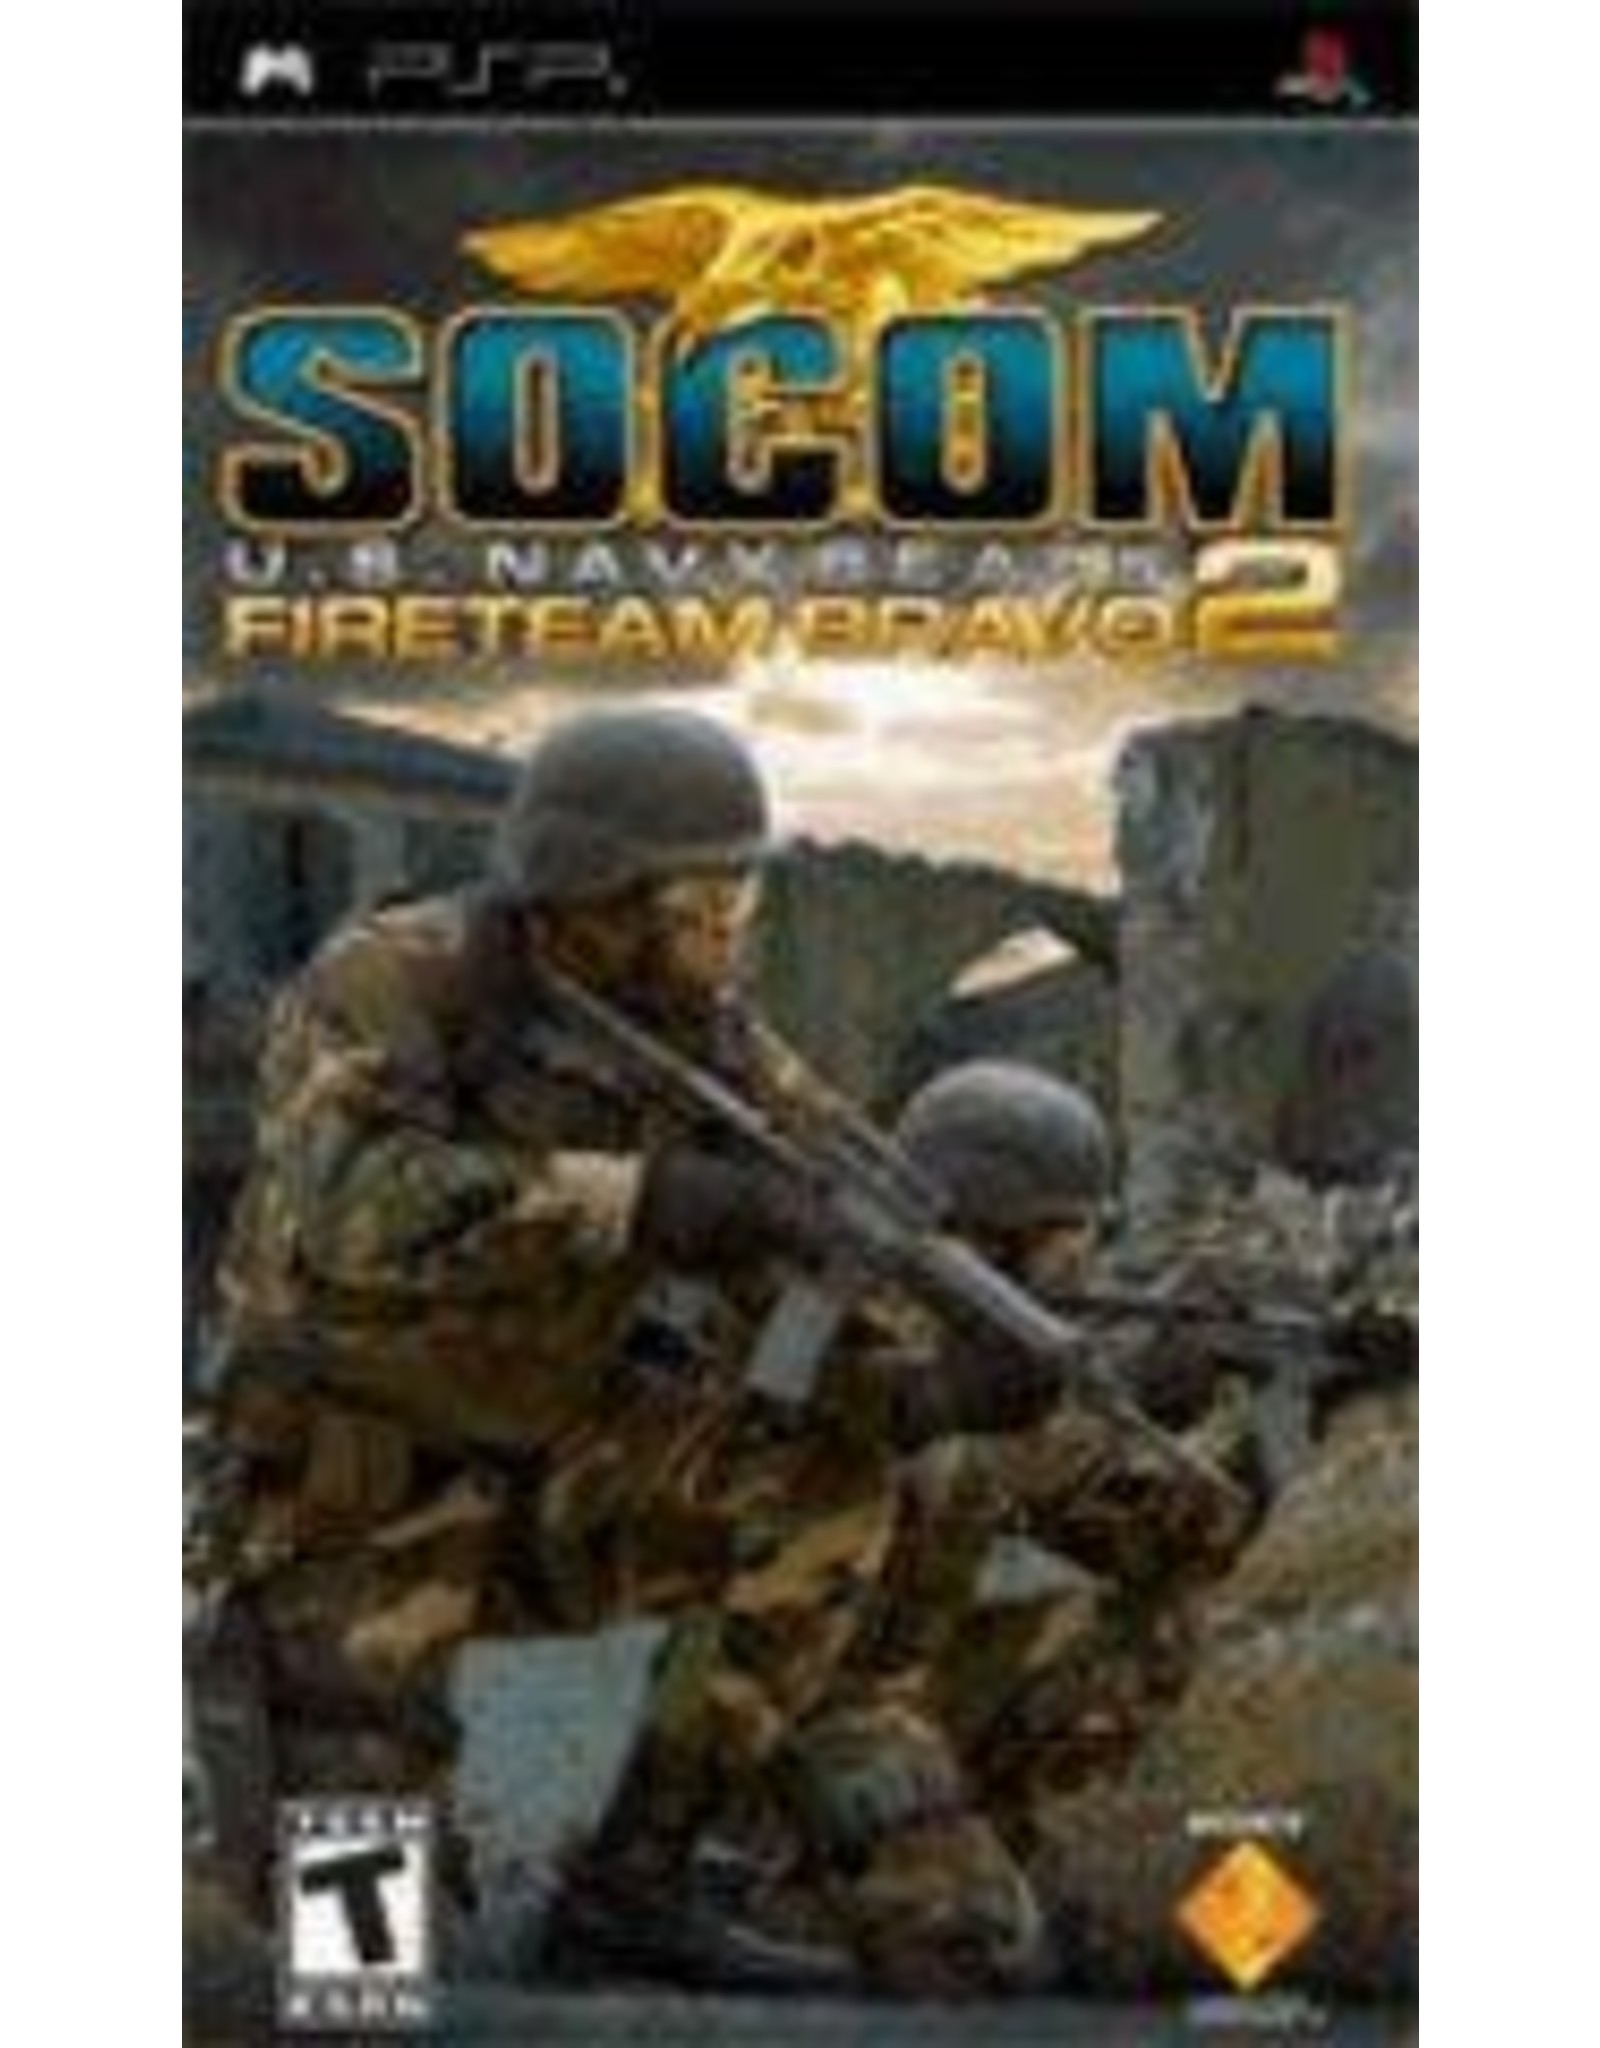 NEW Sealed Socom US Navy Seals Fireteam Bravo Video Game Sony PSP Fire Team  711719861522